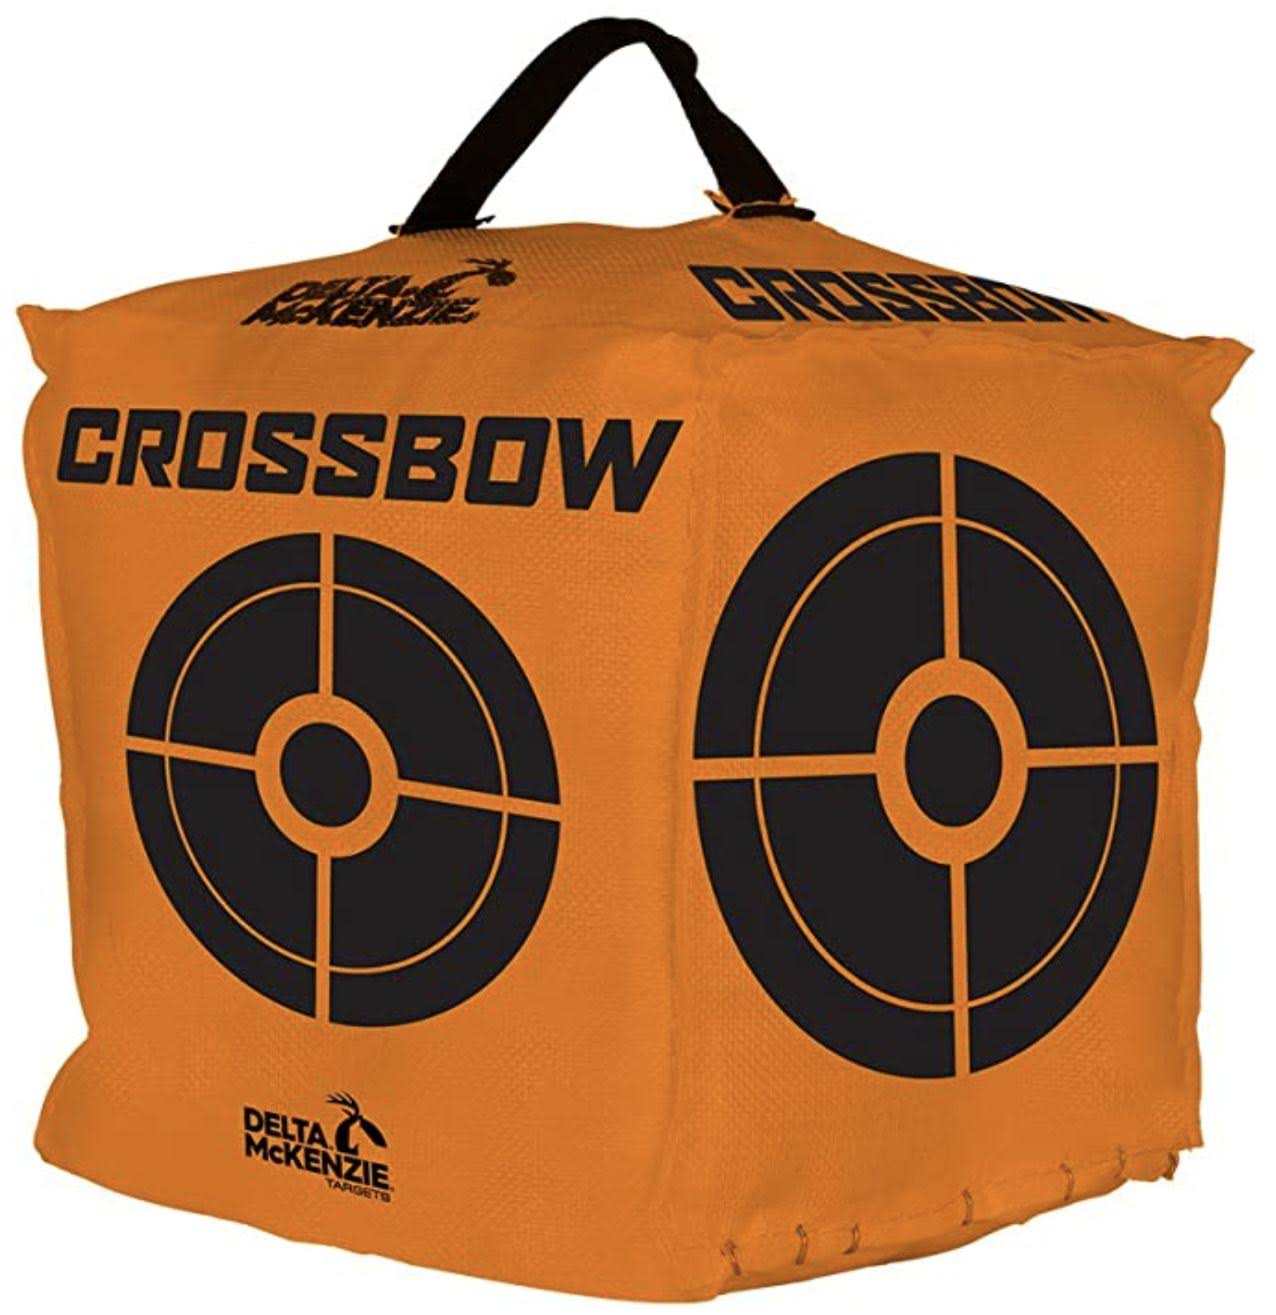 Delta McKenzie Crossbow Bag Target